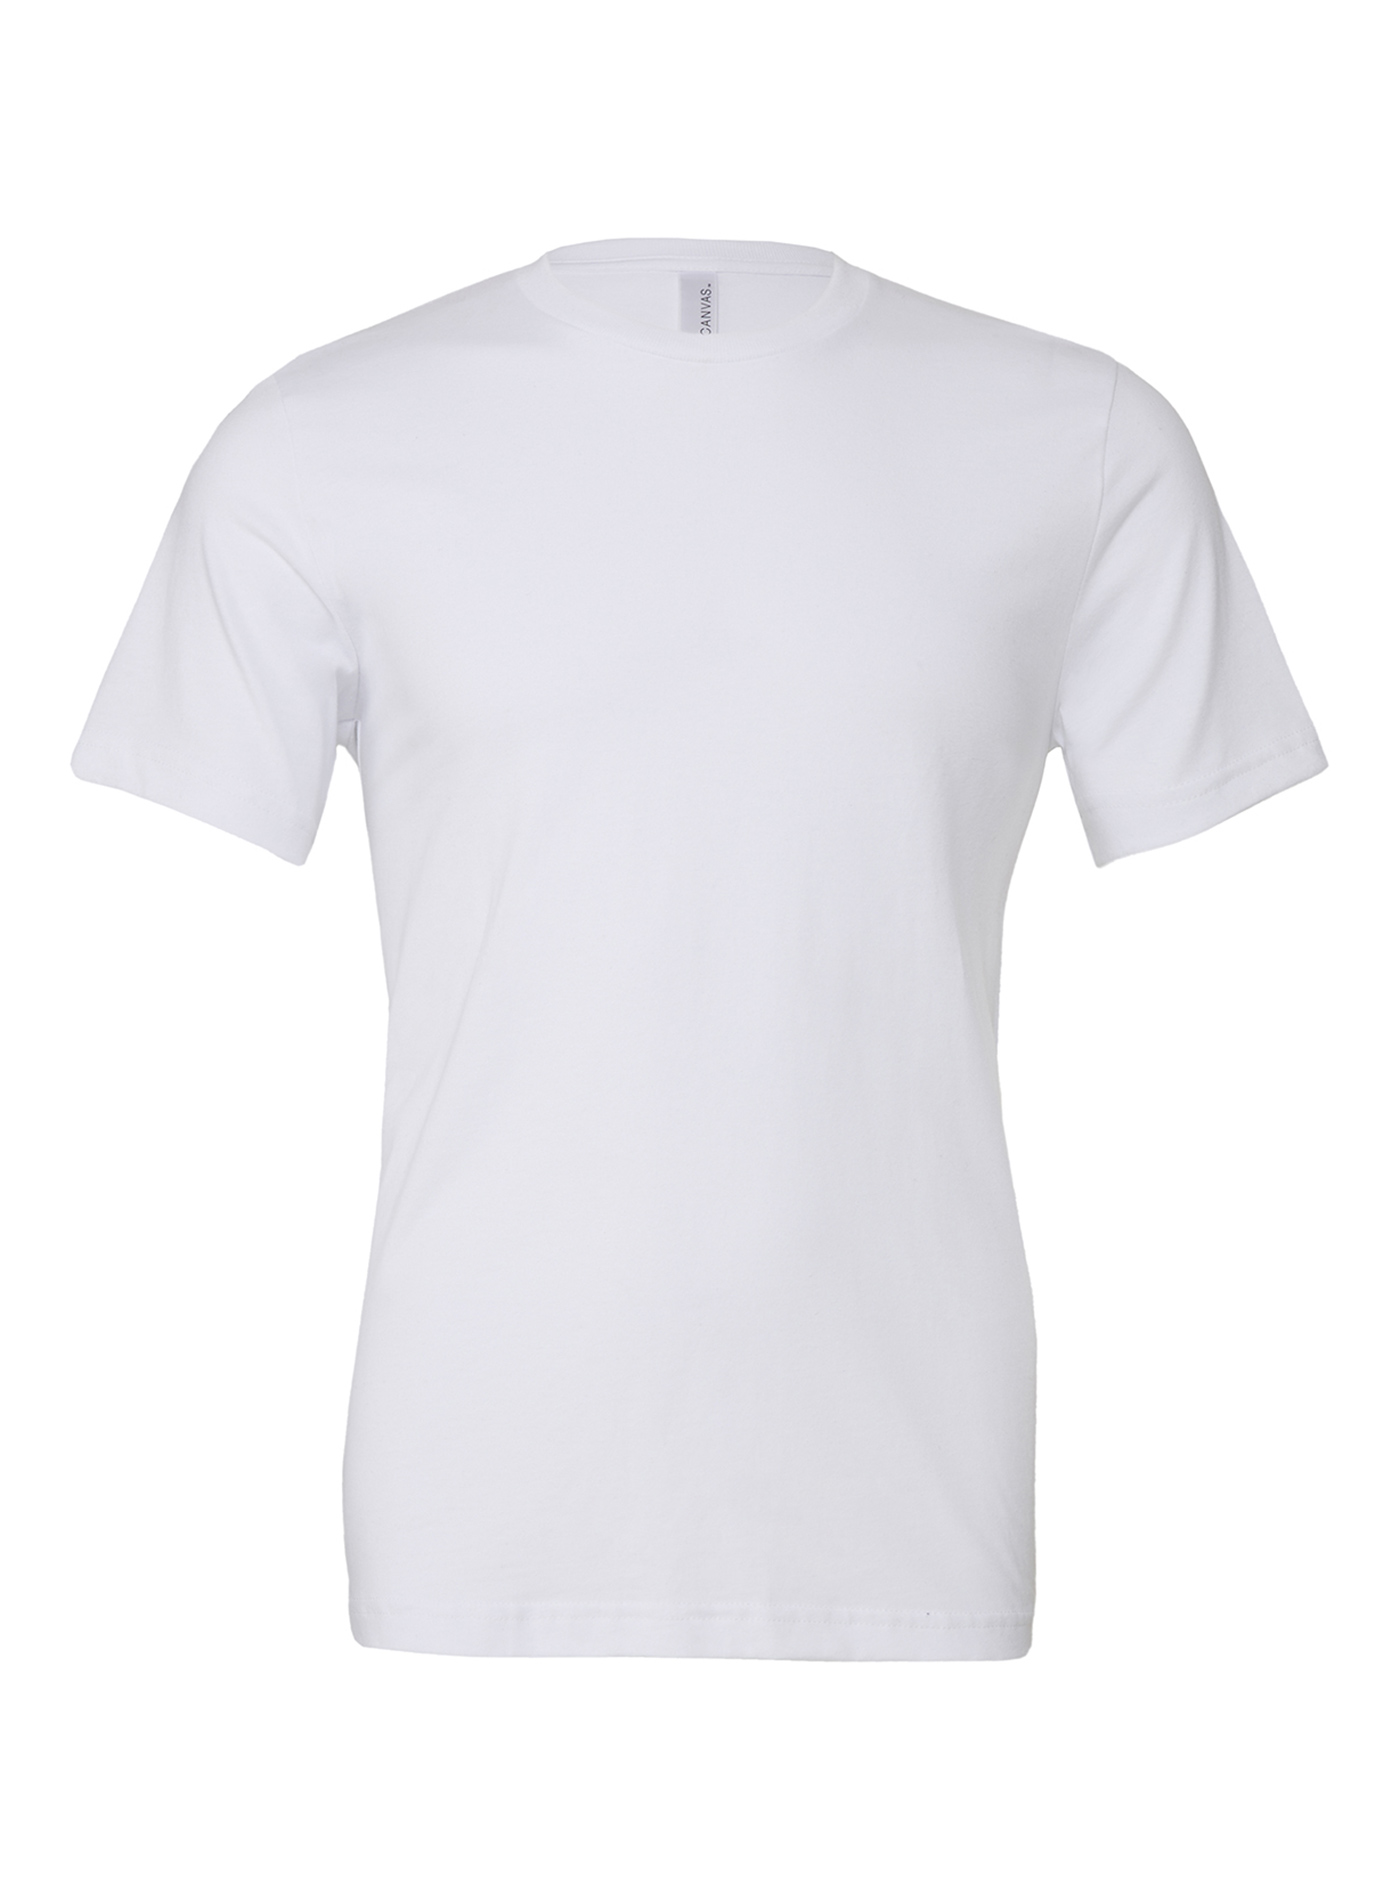 Unisex tričko Bella + Canvas Jersey - Bílá M